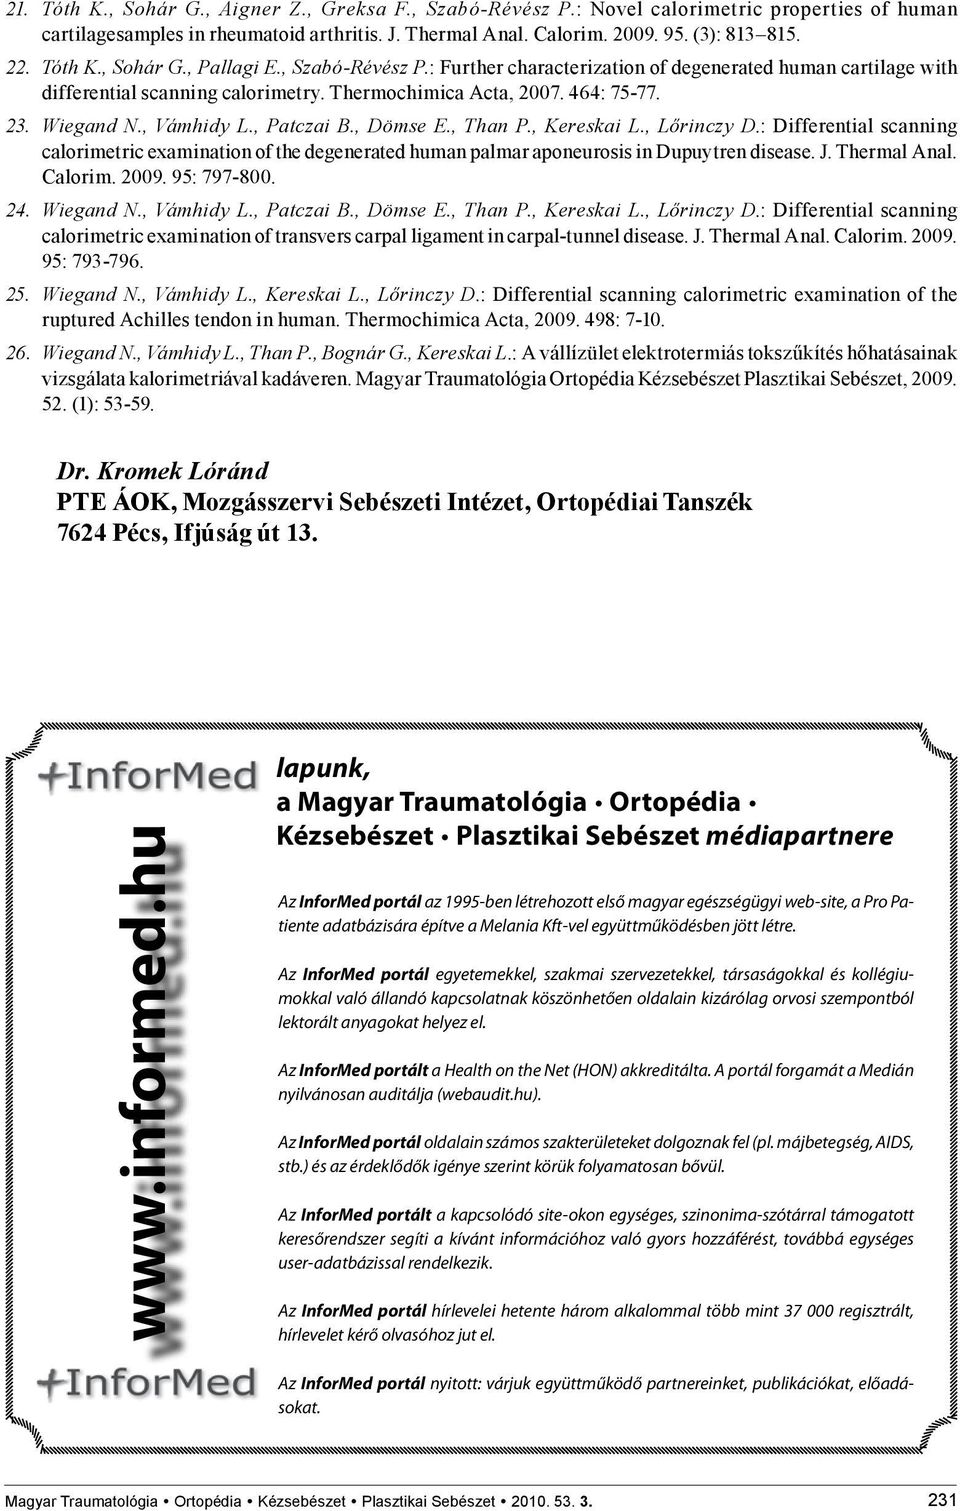 , Vámhidy L., Patczai B., Dömse E., Than P., Kereskai L., Lőrinczy D.: Differential scanning calorimetric examination of the degenerated human palmar aponeurosis in Dupuytren disease. J. Thermal Anal.